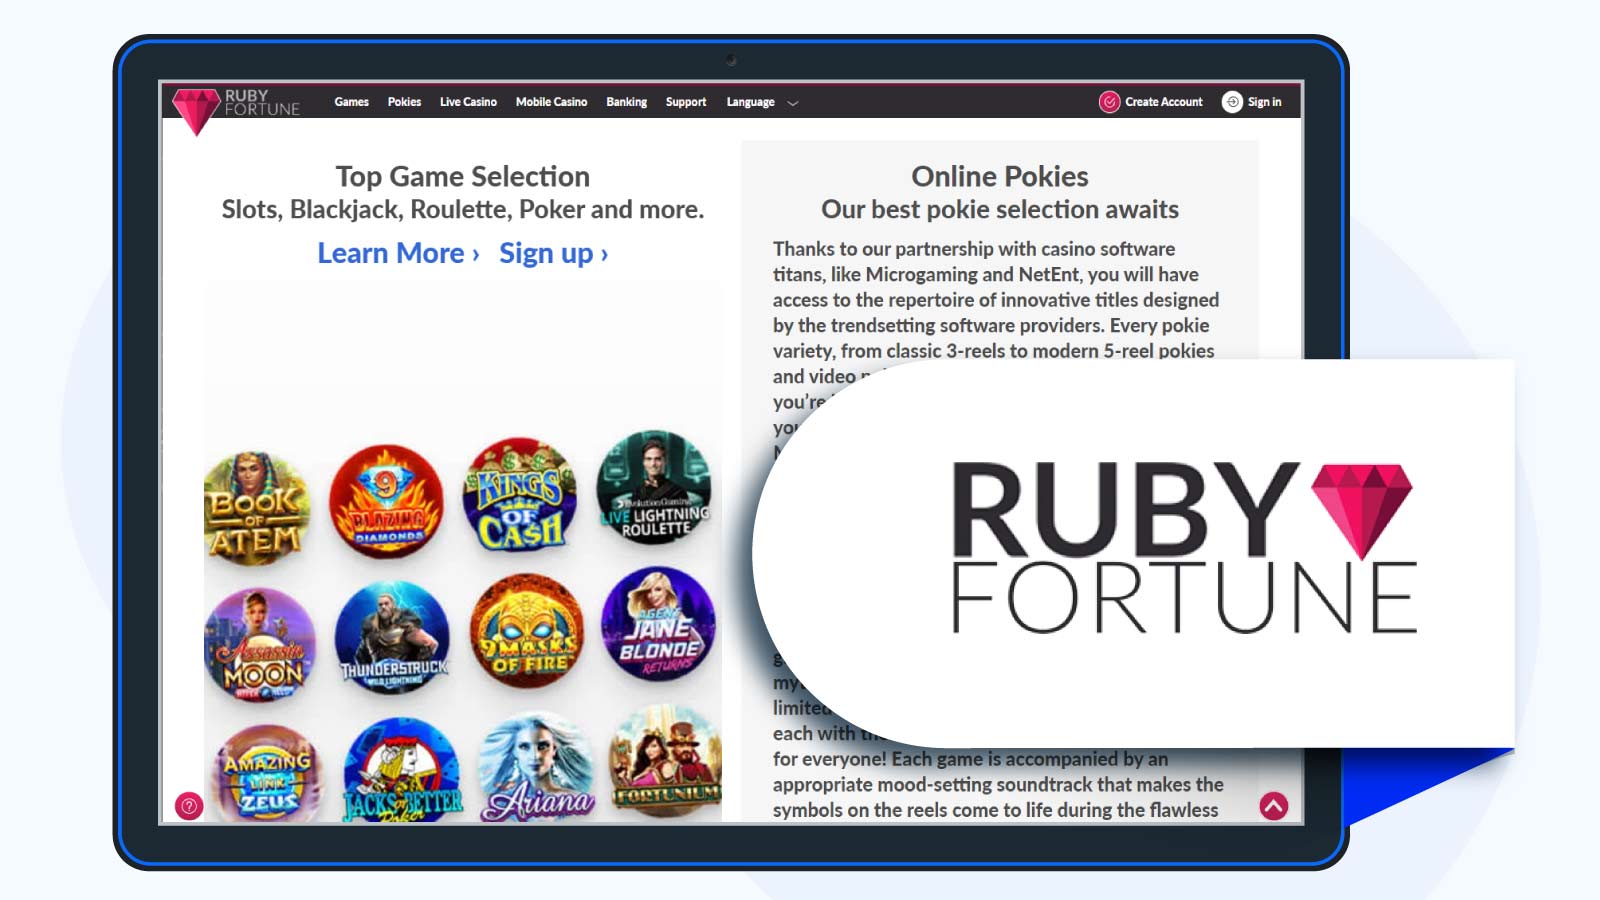 Ruby Fortune Casino homepage